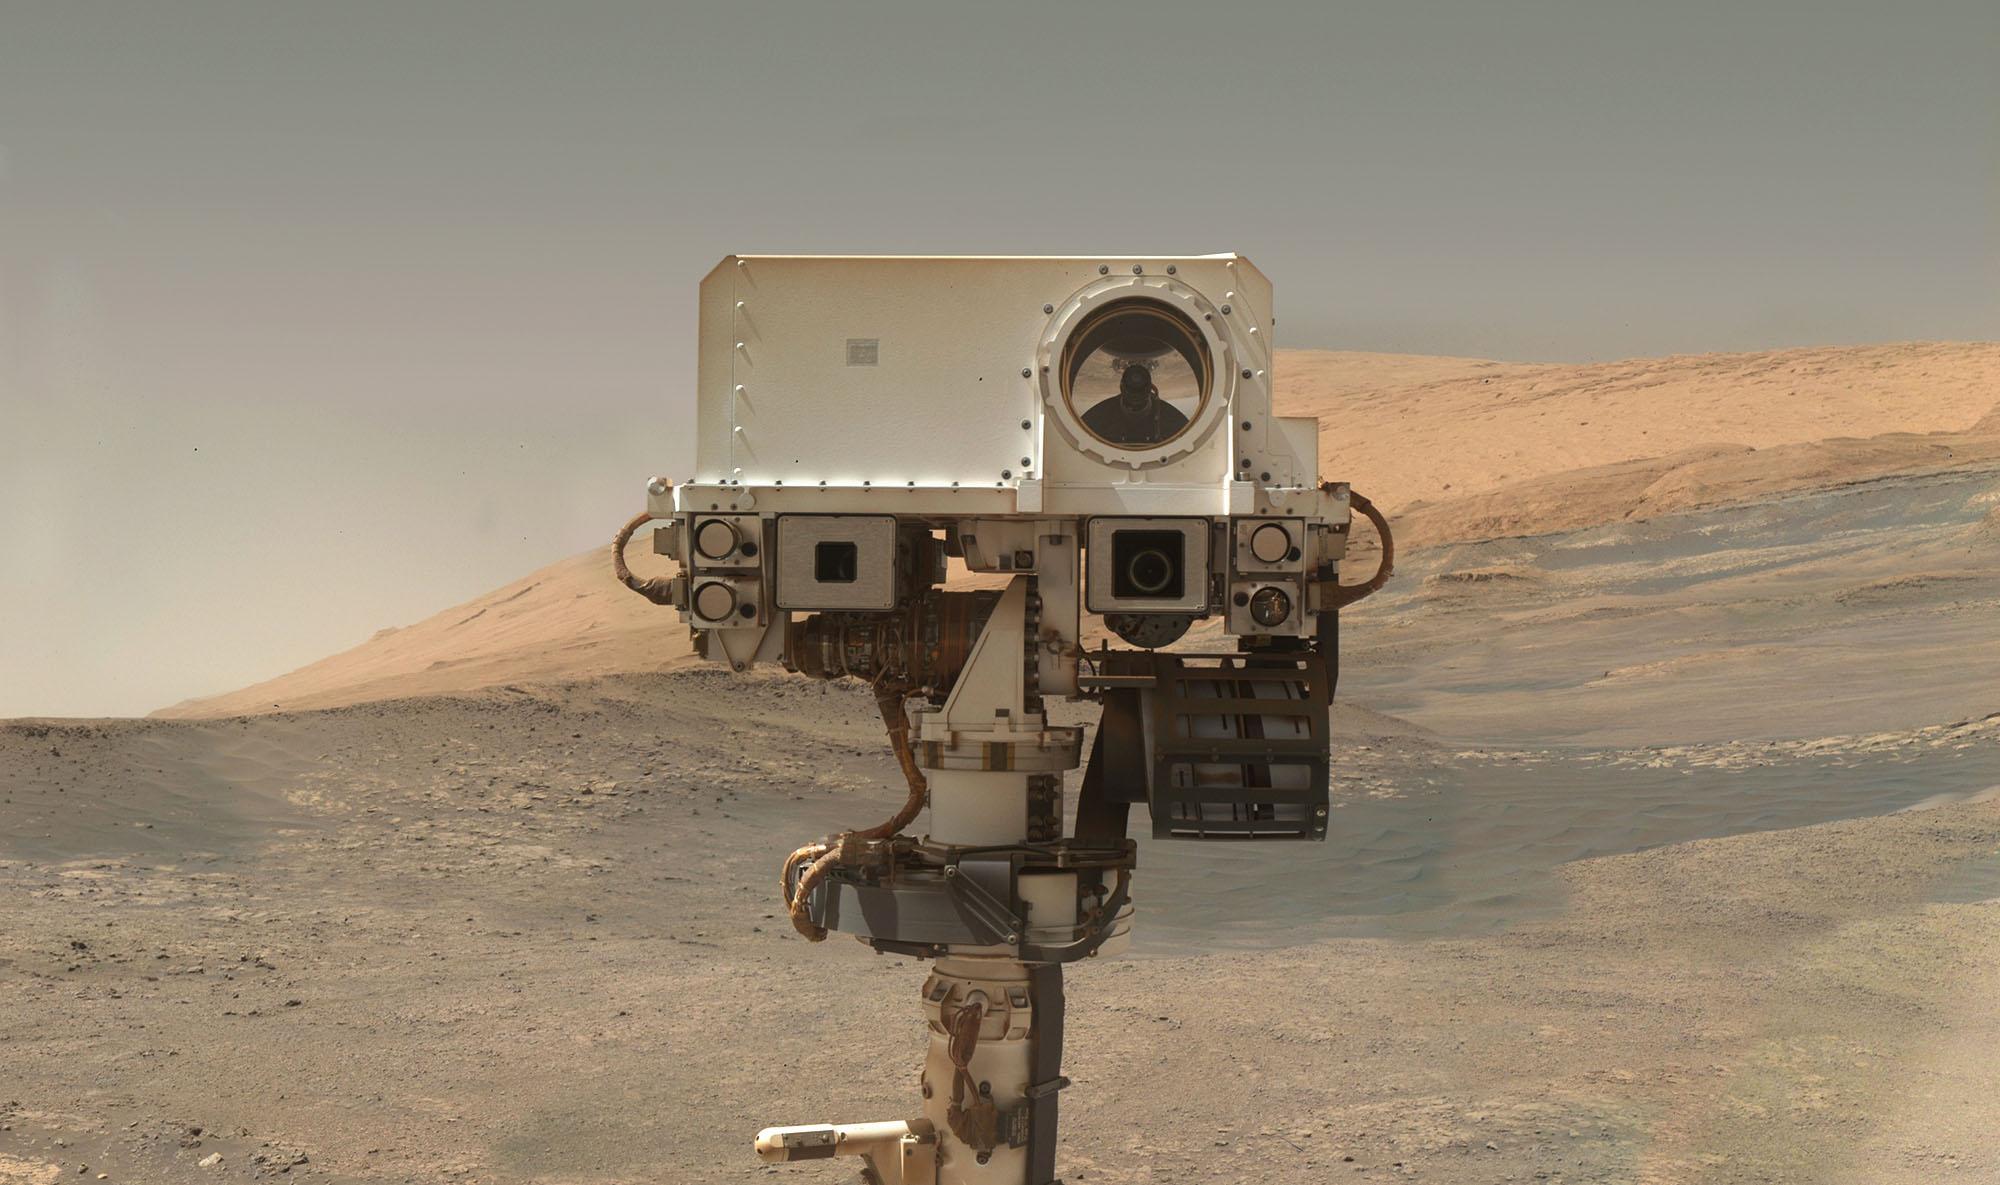 Days on Mars With the Curiosity Rover